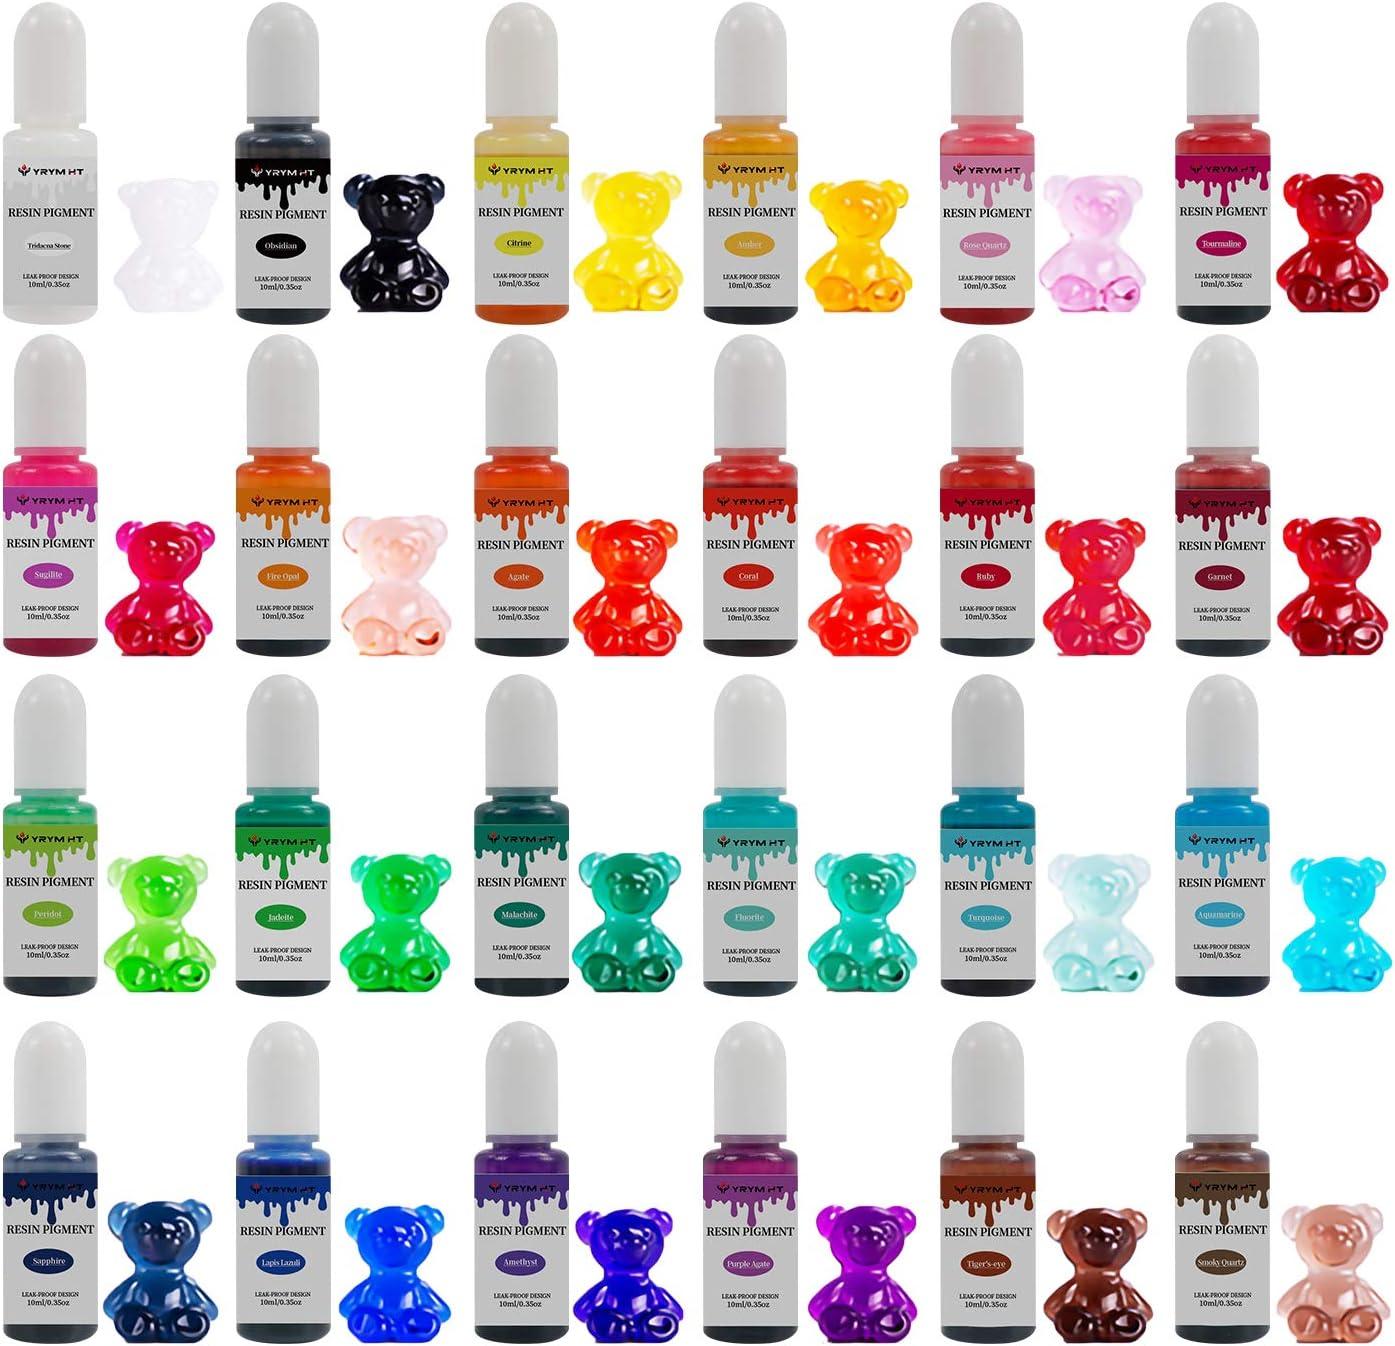 Epoxy Resin Pigment - 24 Colors Transparent Non-Toxic UV Epoxy